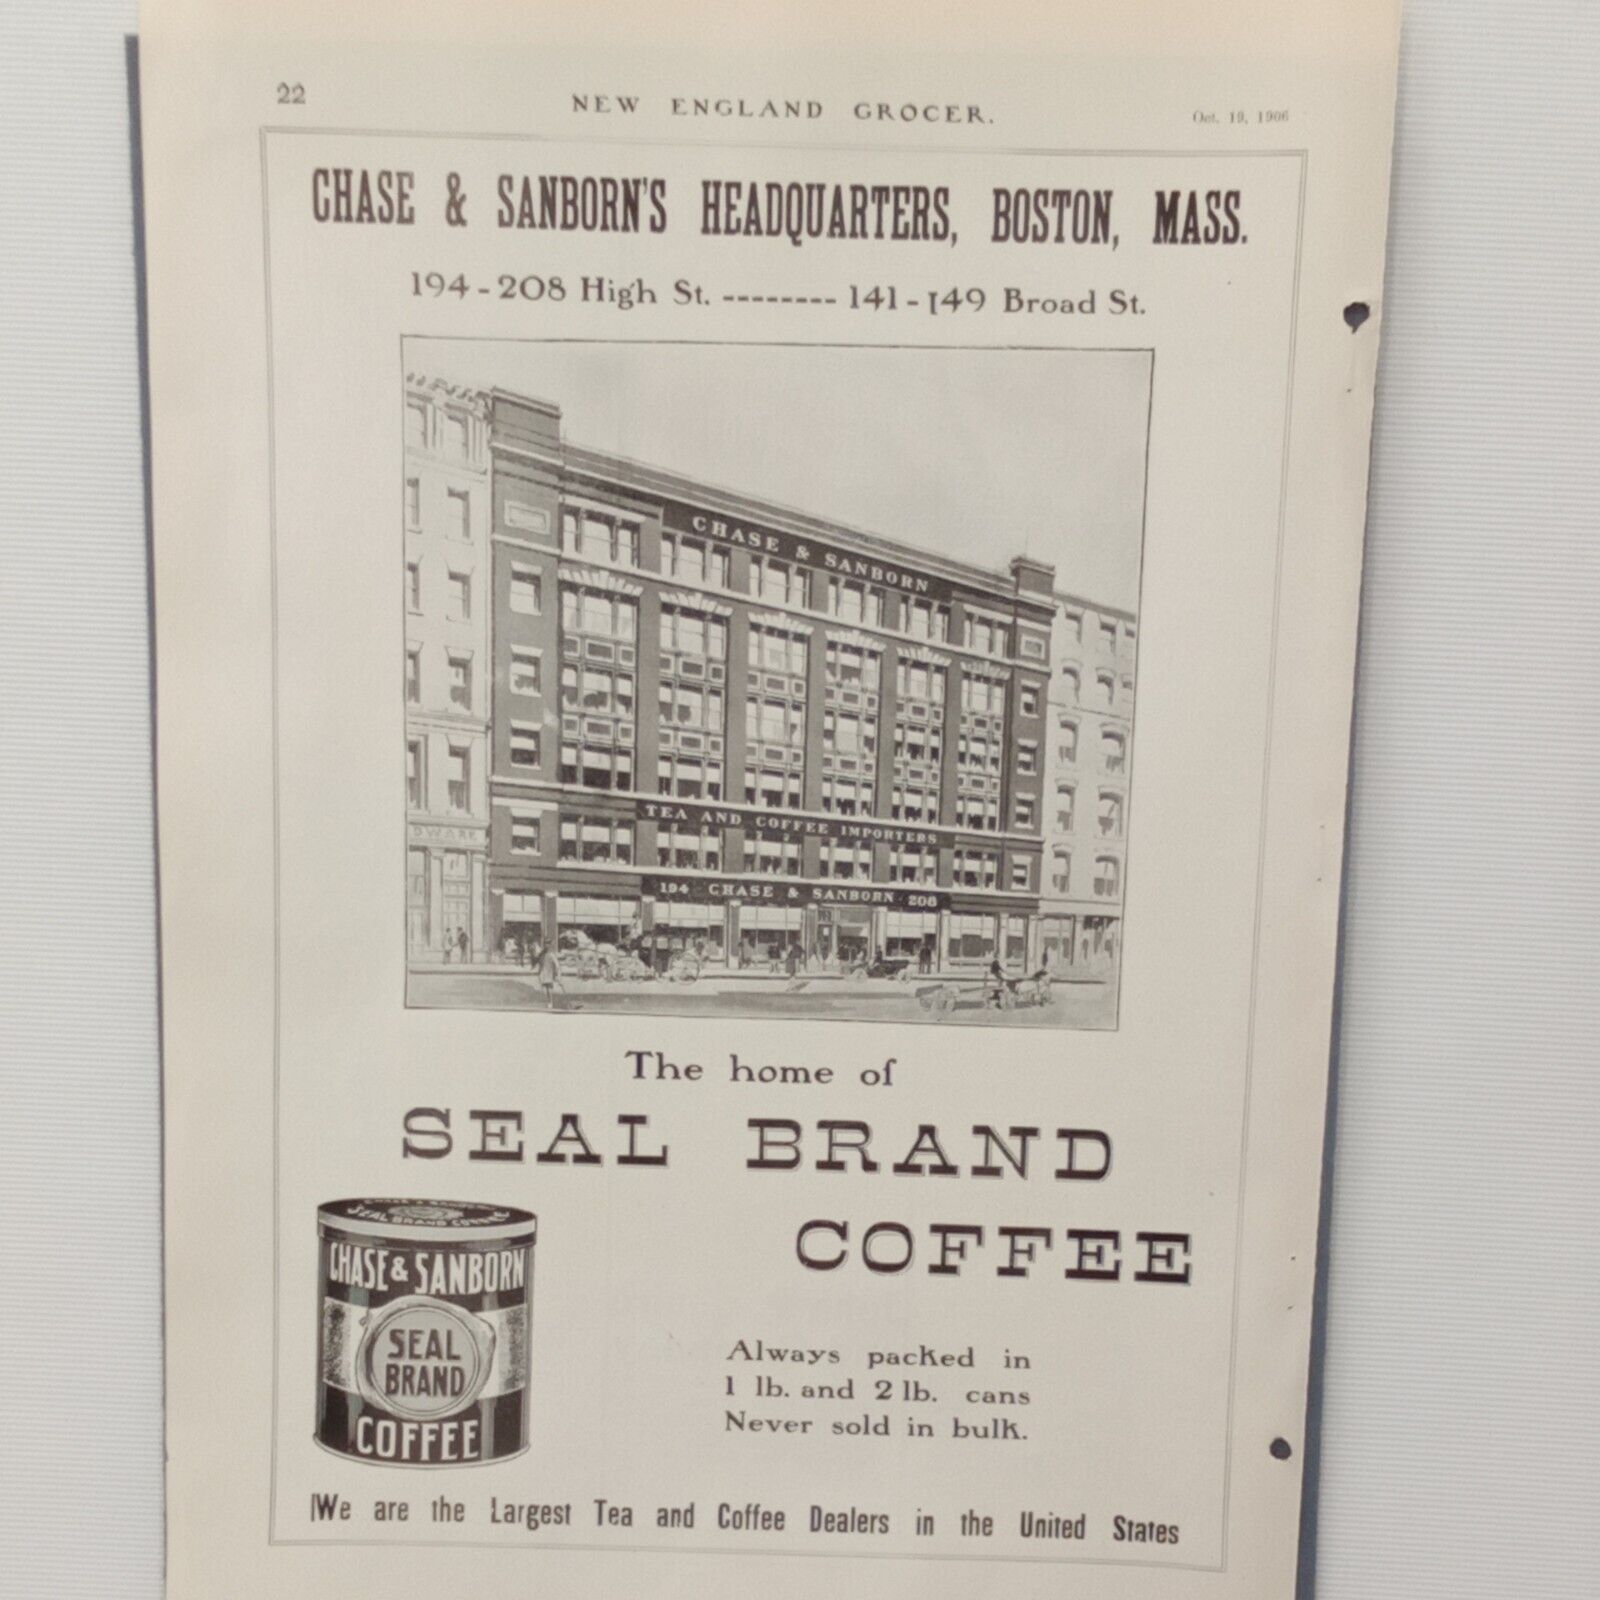 Chase & Sanborn Coffee  1906 Print Ad Headquarters Building Boston Sealed Brand